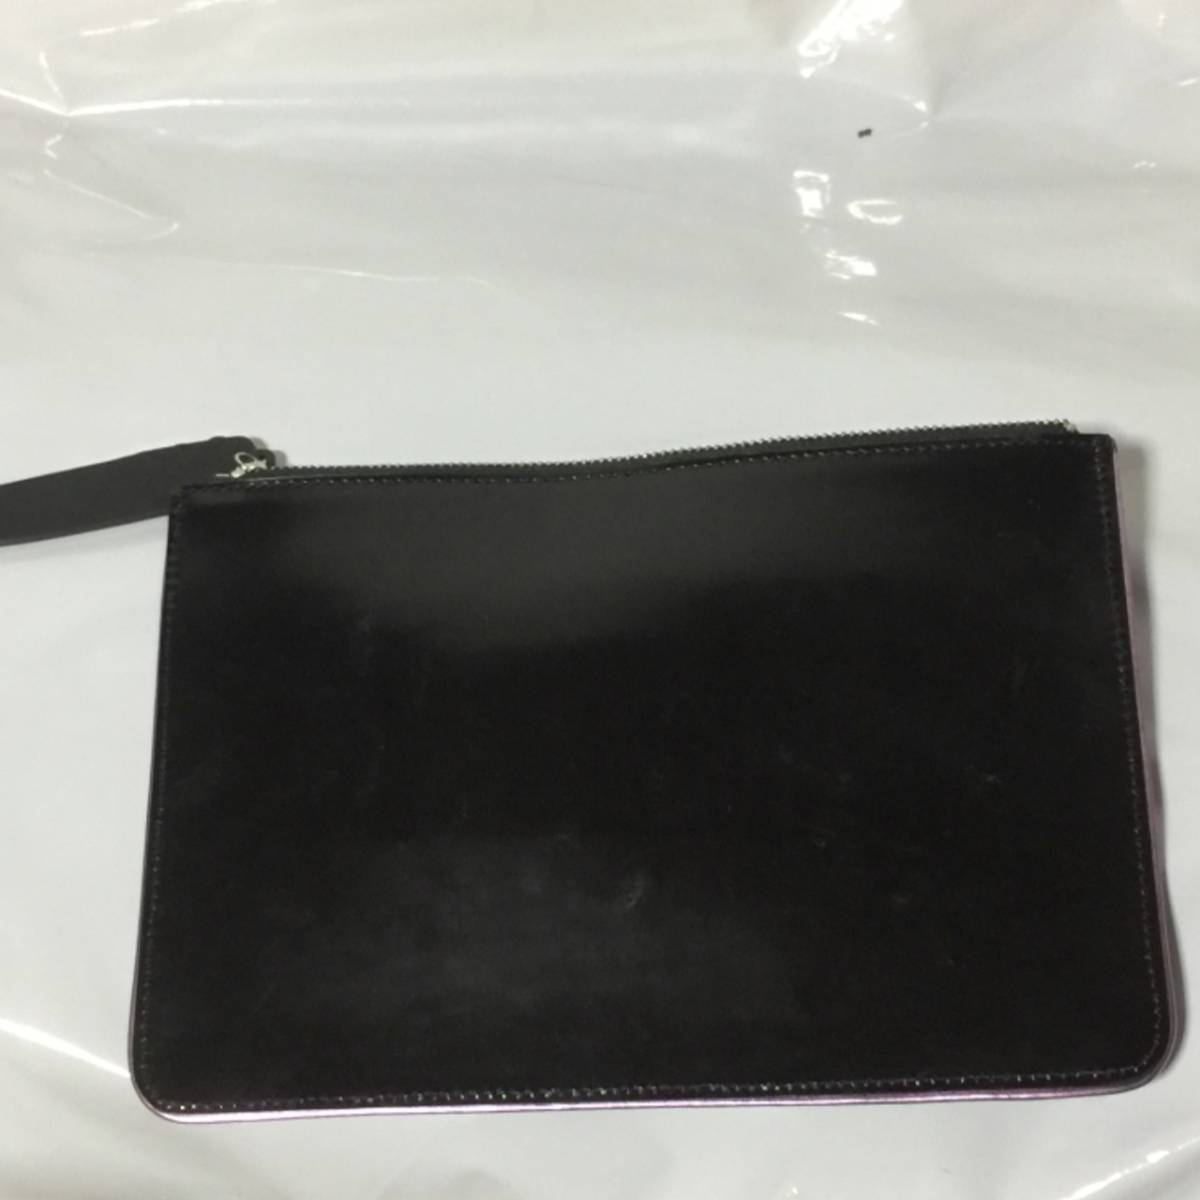 yazb key Yazbukey cosme motif leather clutch bag / pouch / storage bag attaching 